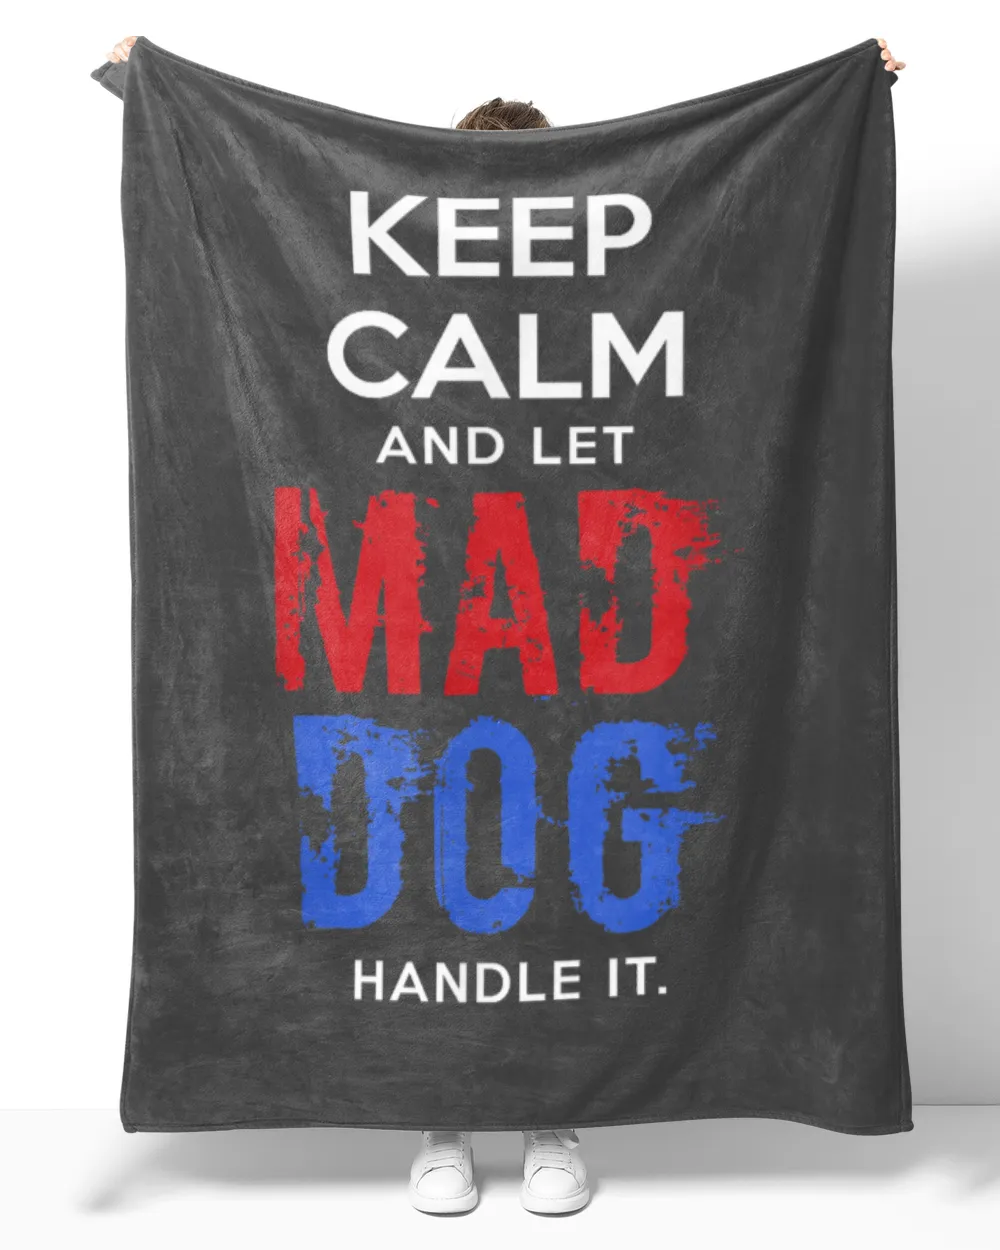 Mad Dog Mattis T Shirts - Let General Mattis handle it